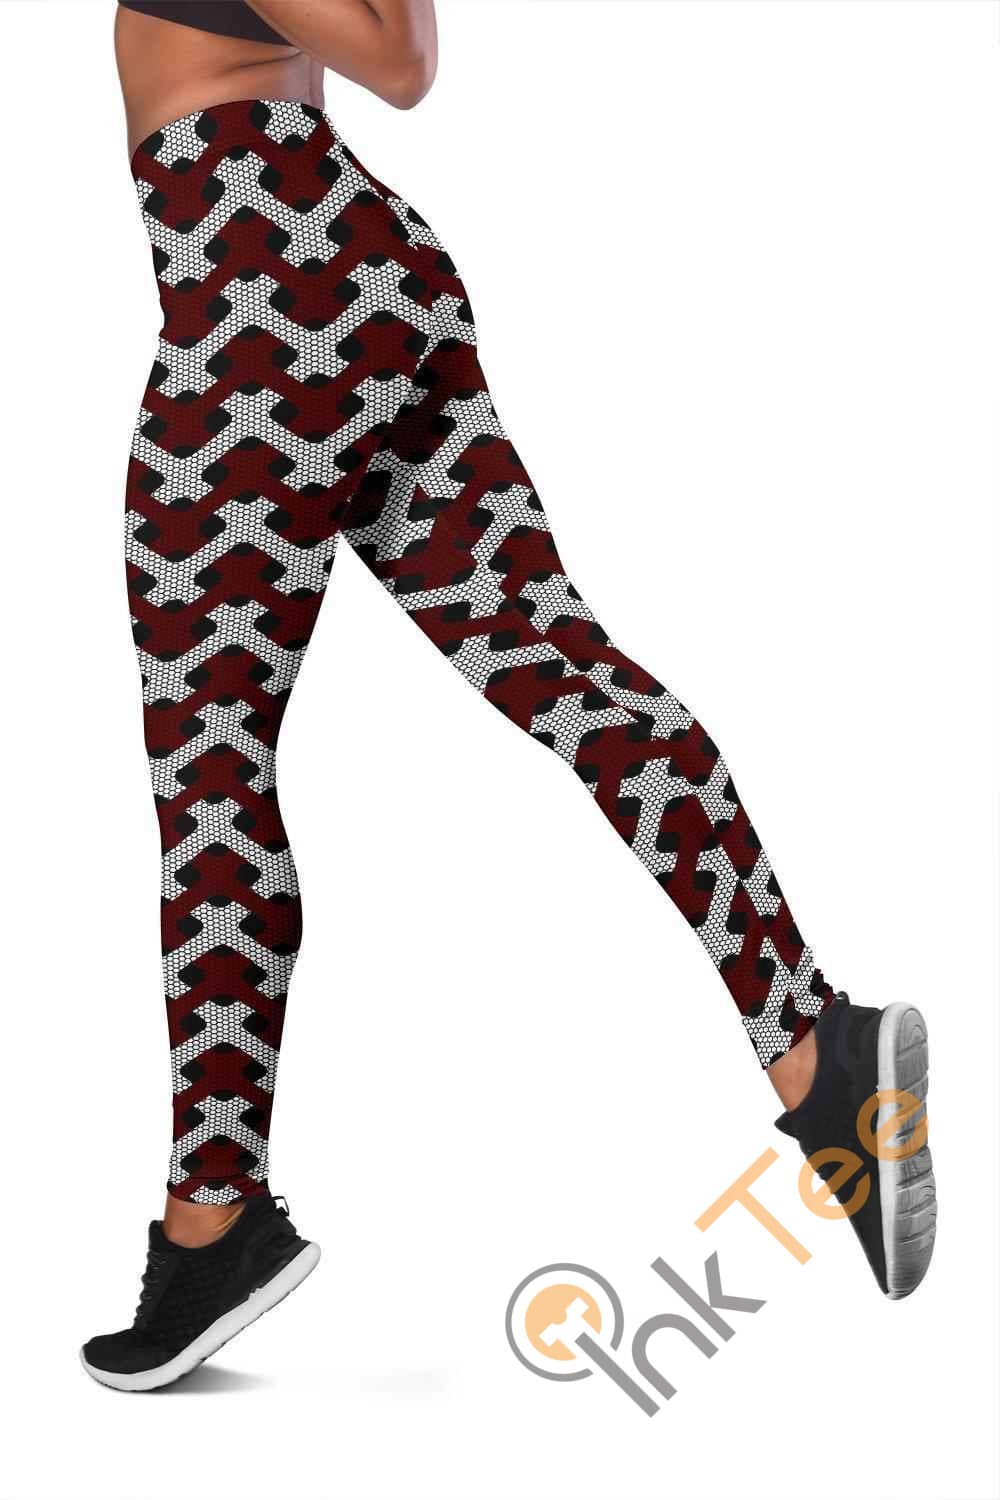 Inktee Store - Mississippi State Bulldogs Inspired 3D All Over Print For Yoga Fitness Fashion Women'S Leggings Image